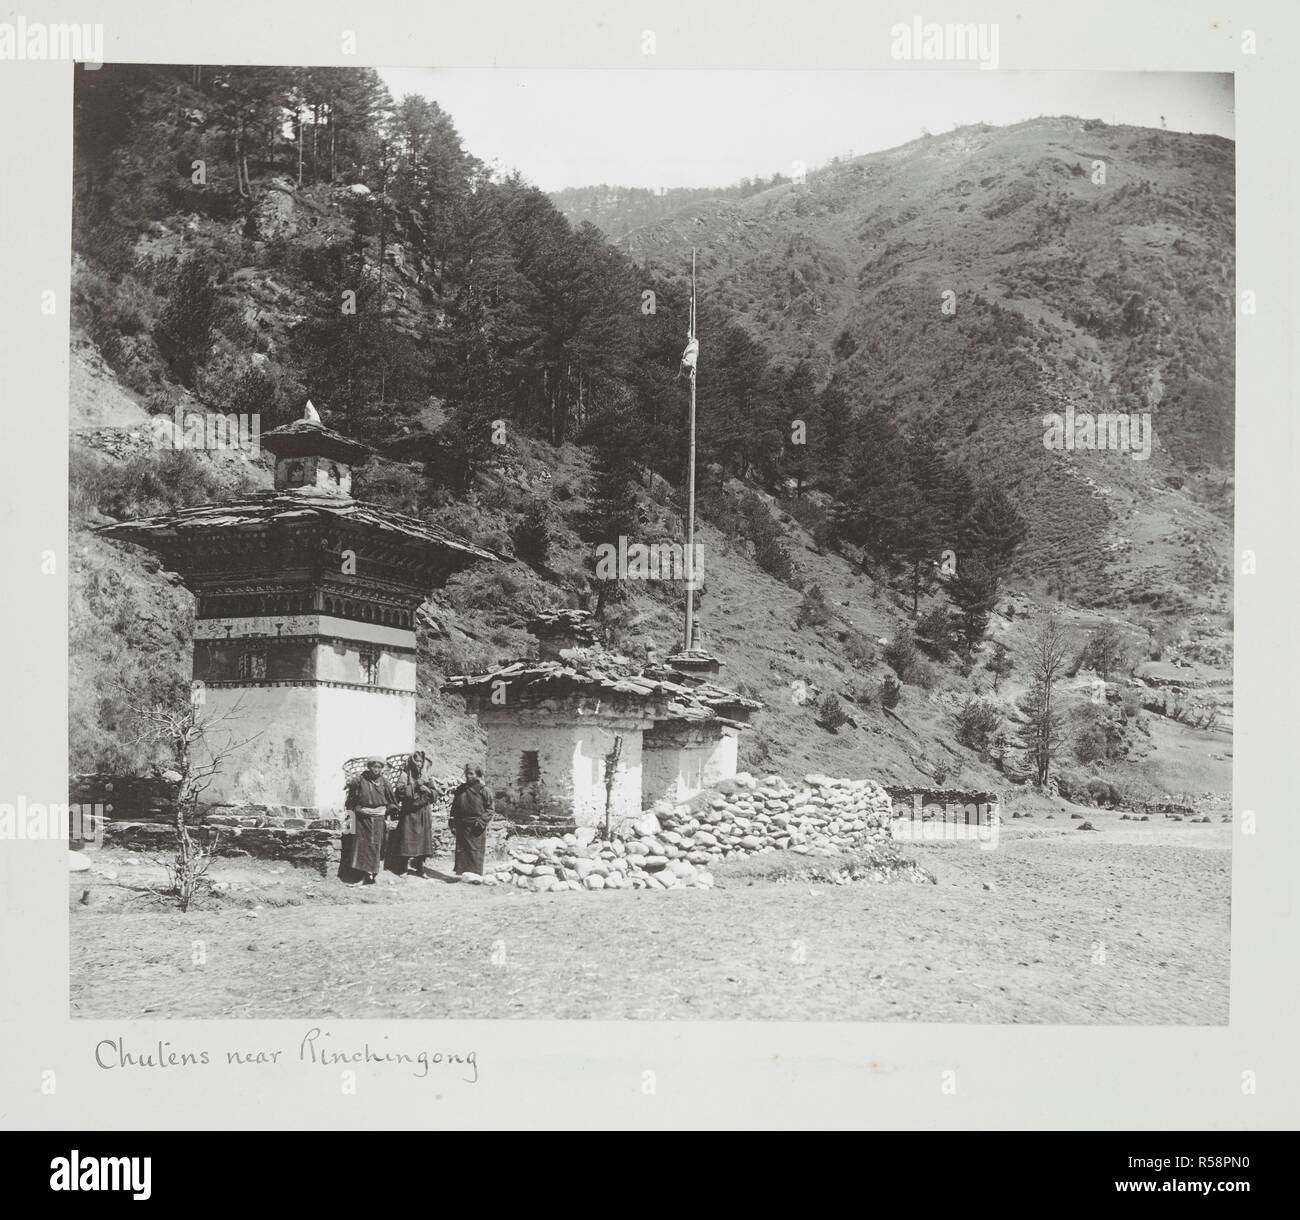 Chutens near Rinchingong. 'Tibet'. Curzon collection. c.Dec 1903. 89 prints 295x190mm to 200x1825 Platinum prints. Source: Photo 430/53.(16). Author: White, John Claude. Stock Photo